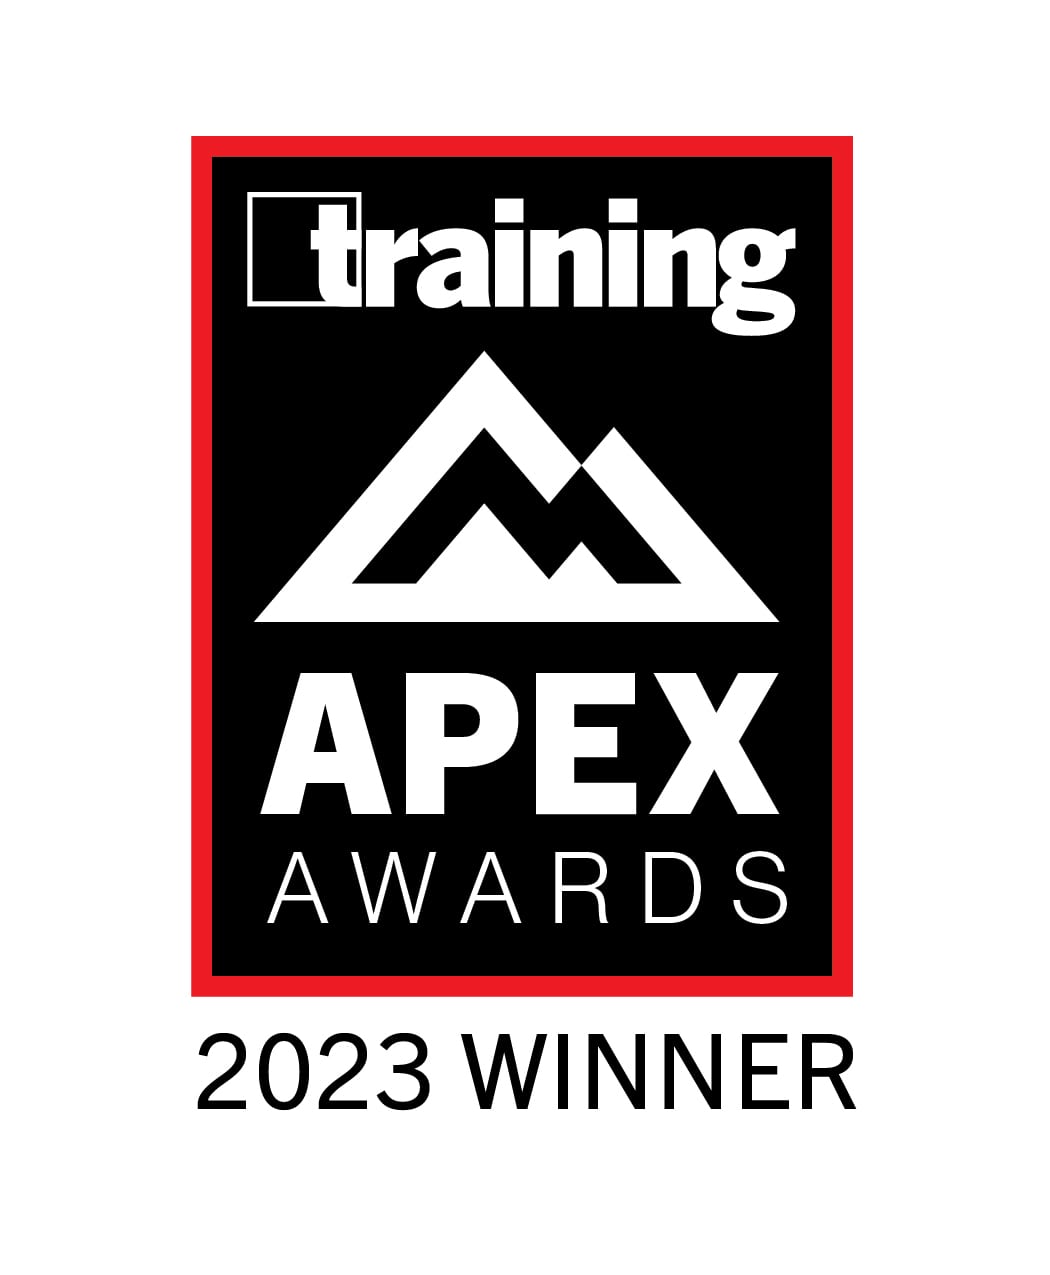 Training Apex Awards 2023 winner